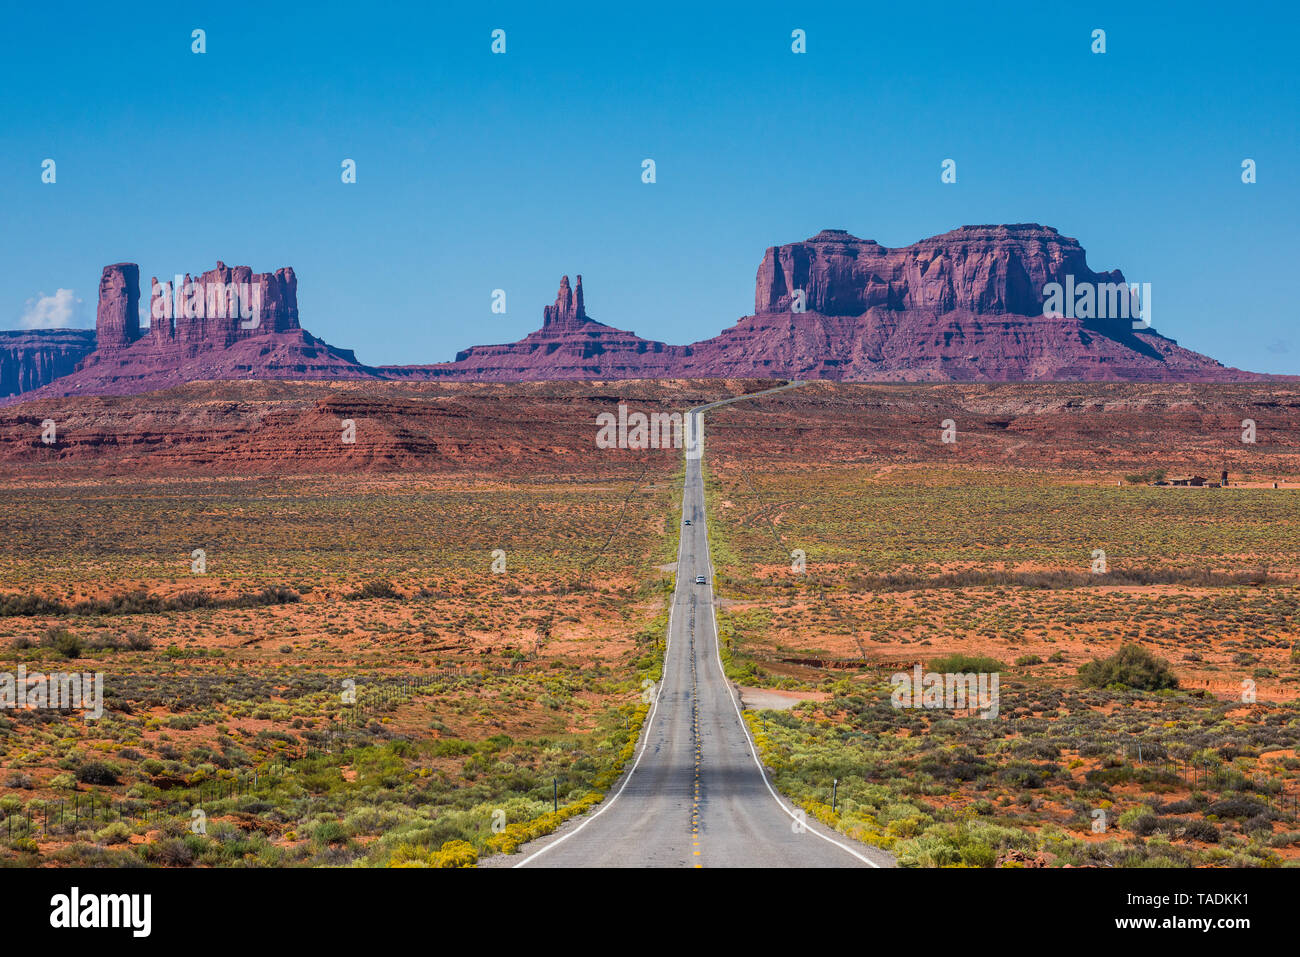 USA, Arizona, Monument valley, empty road Stock Photo